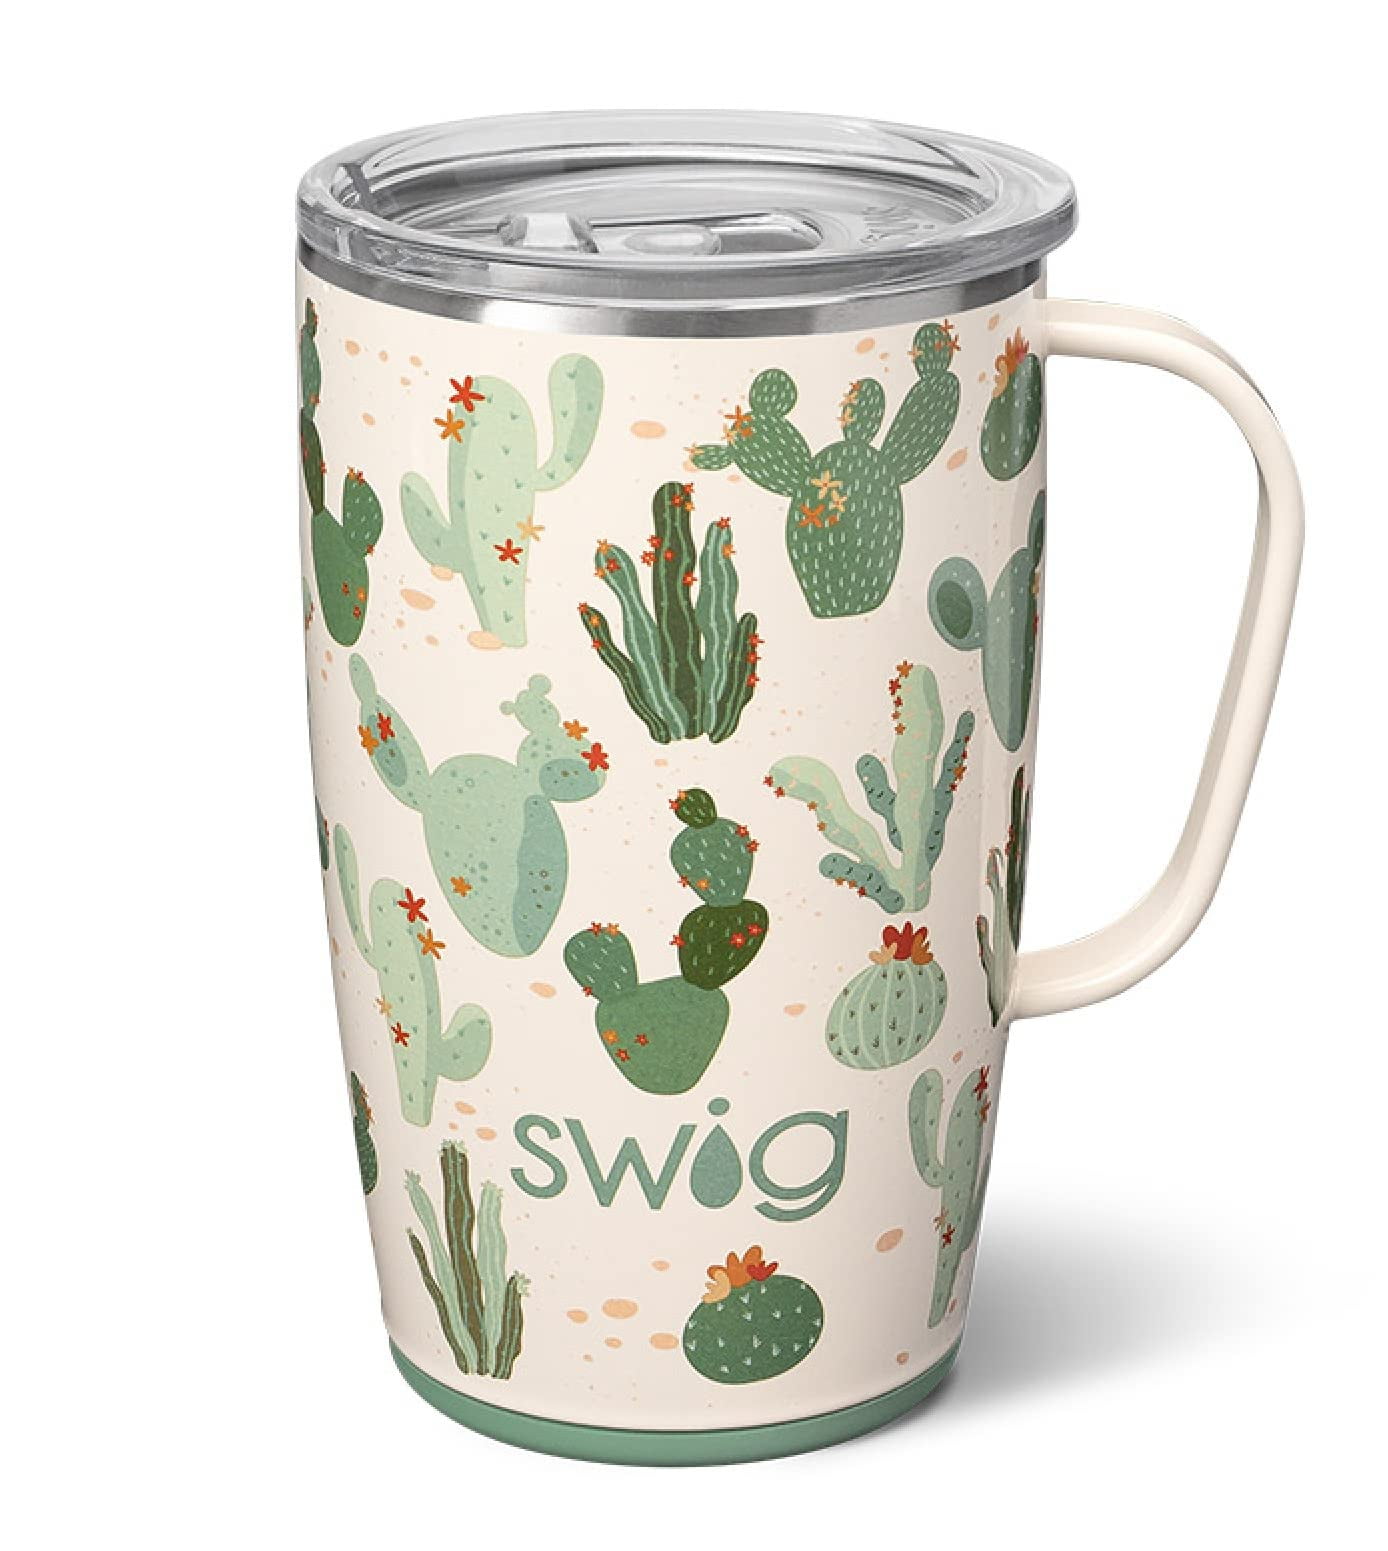 Swig Life: Travel Mug (18oz) - Jingle Jungle